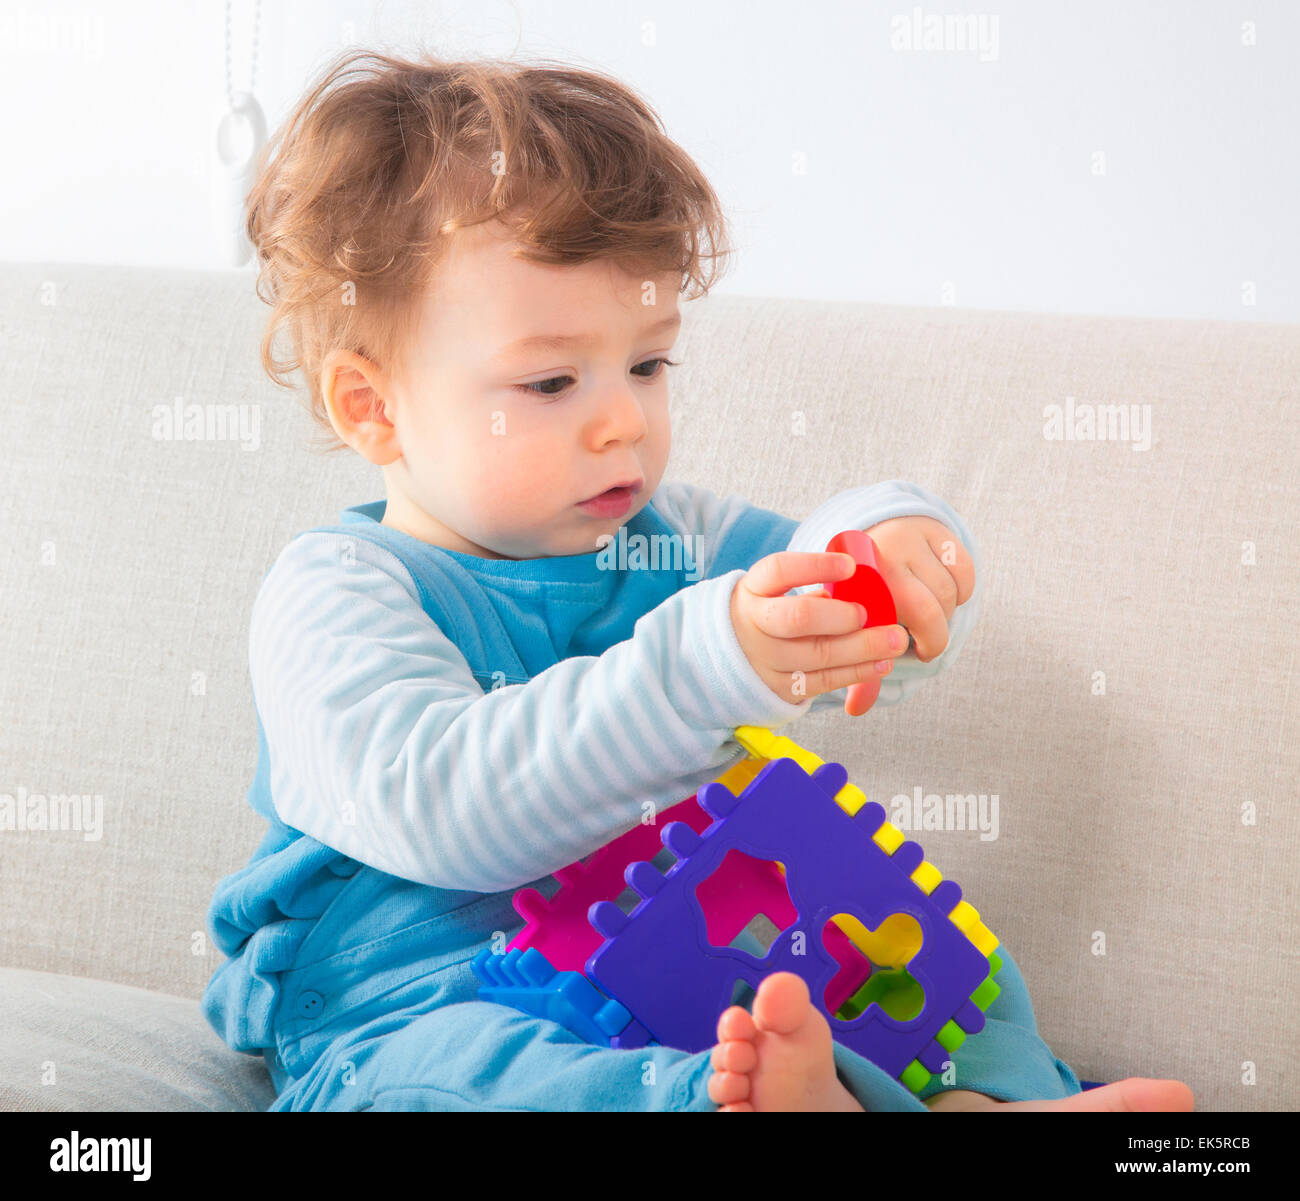 https://c8.alamy.com/comp/EK5RCB/portrait-of-1-year-old-baby-boy-playing-at-home-EK5RCB.jpg